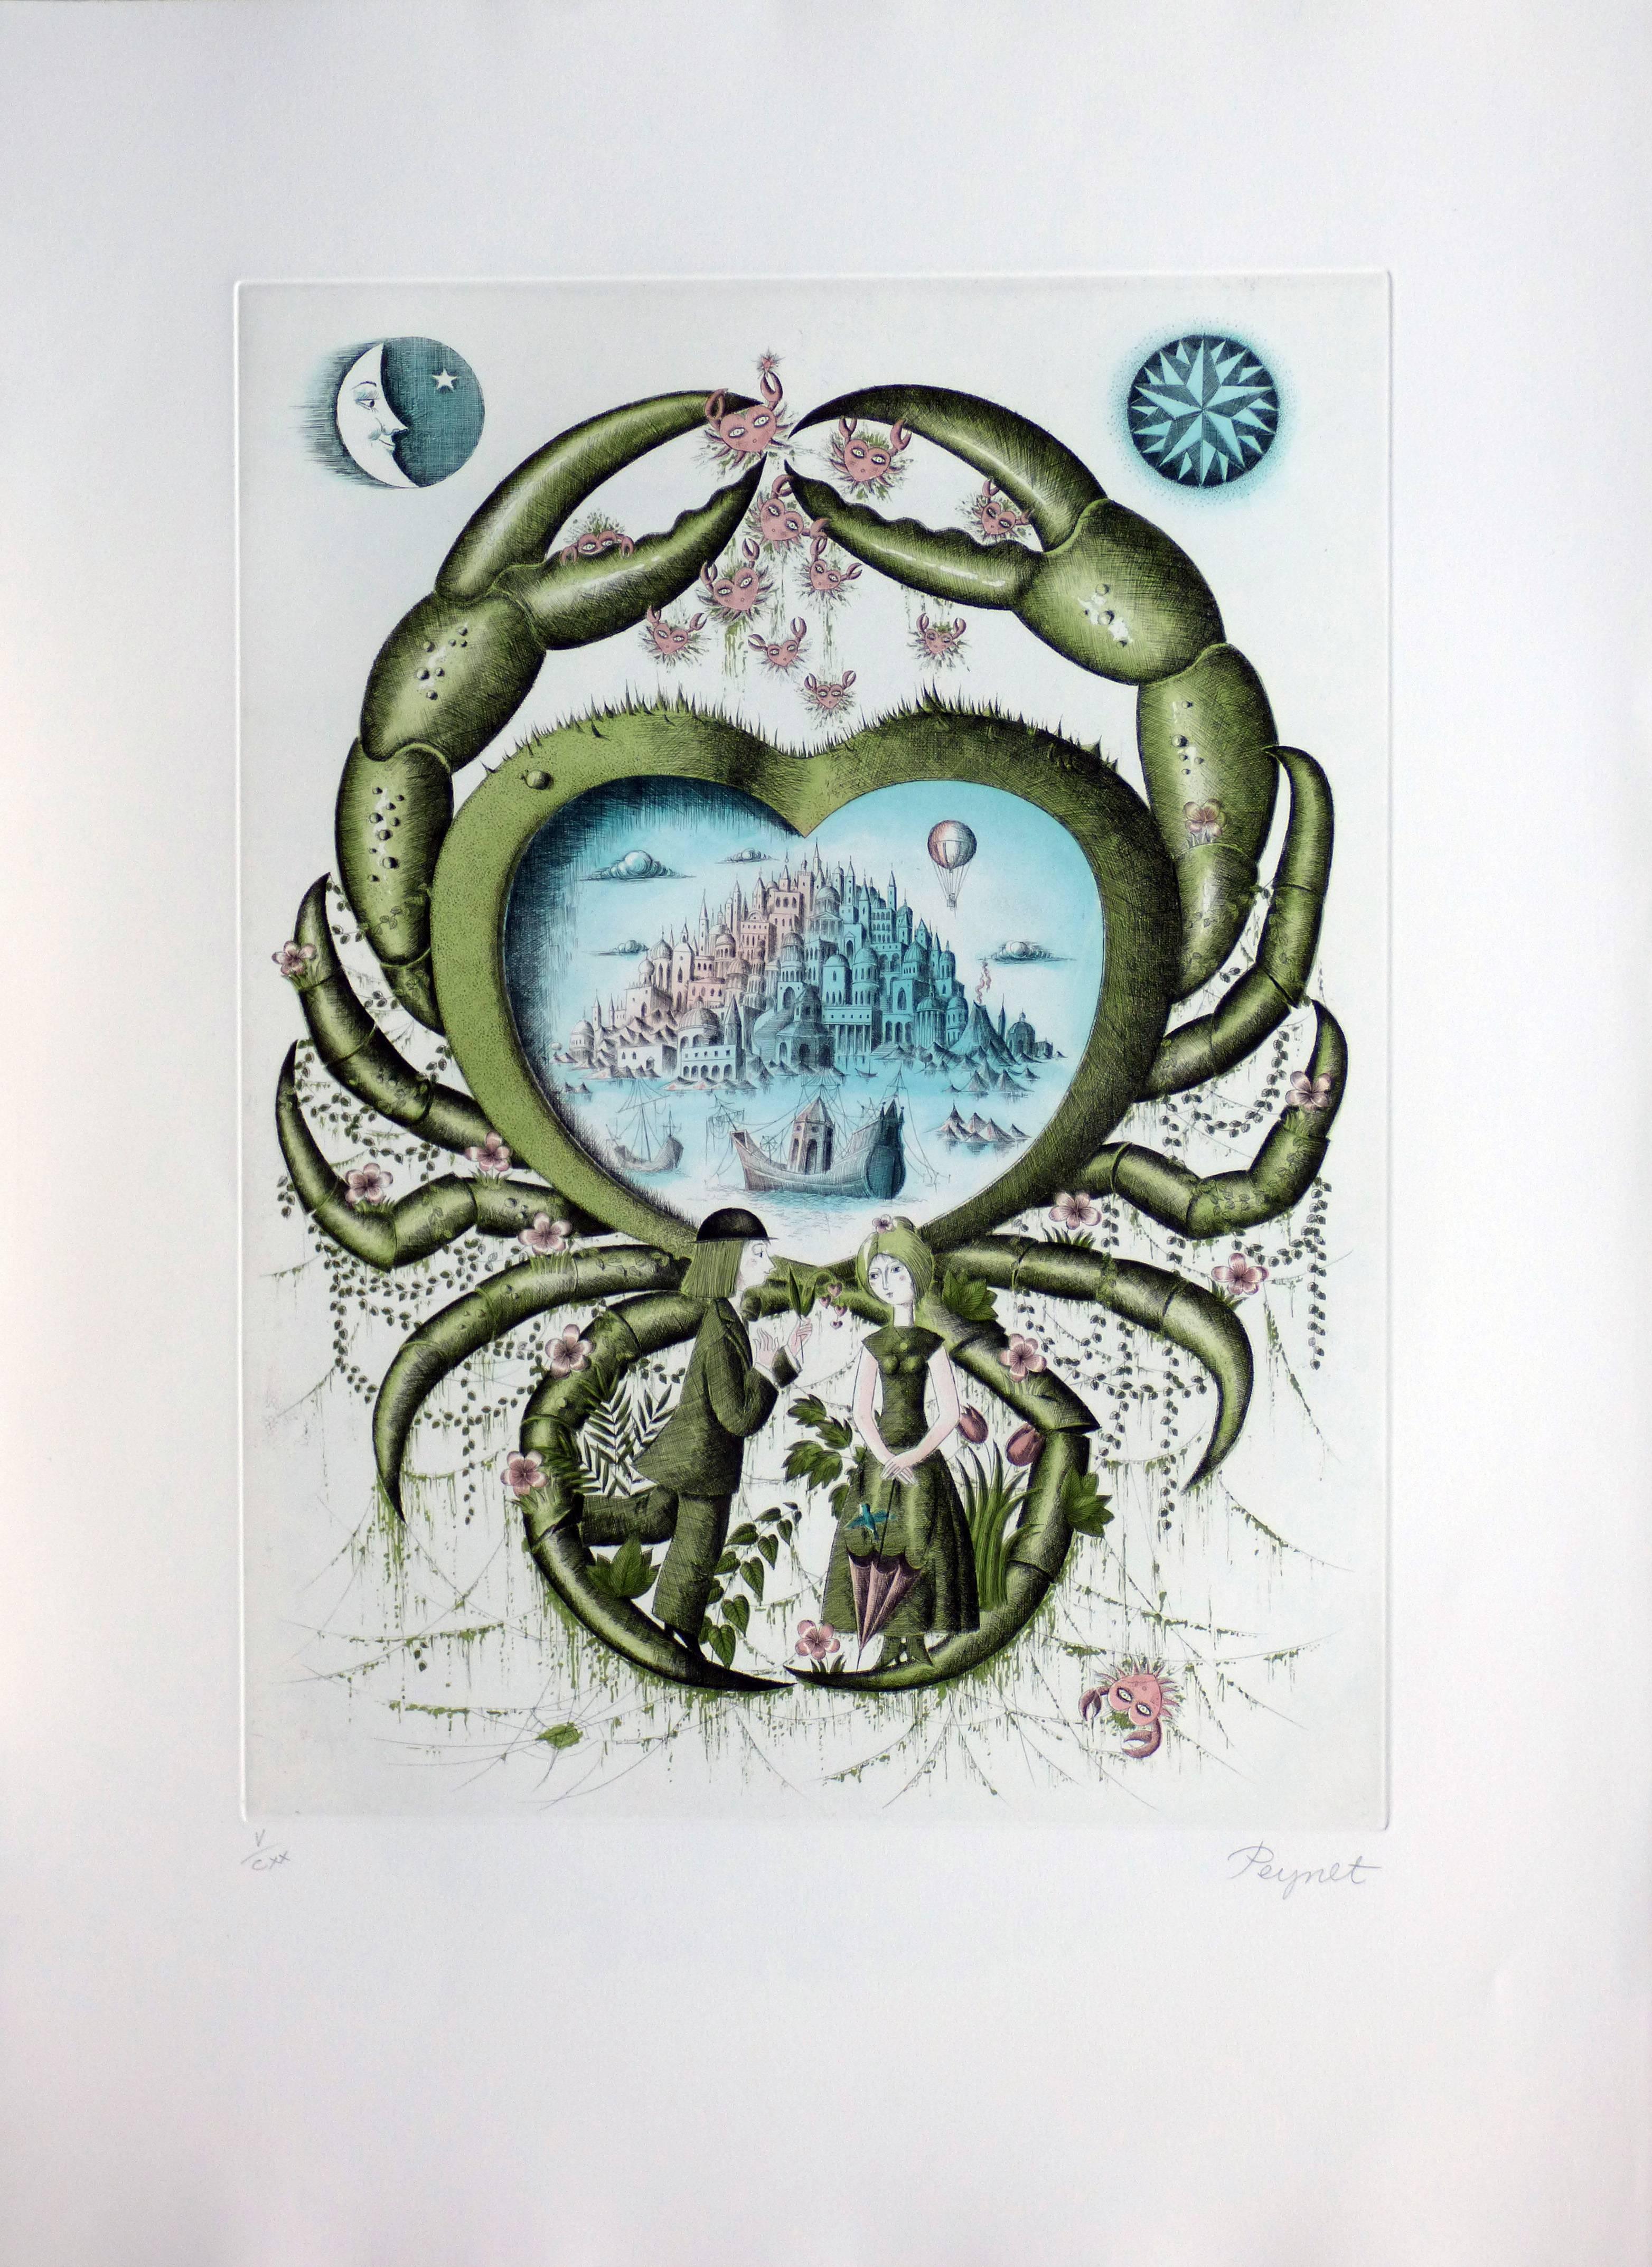 The lovers, the crab - Print by Raymond Peynet